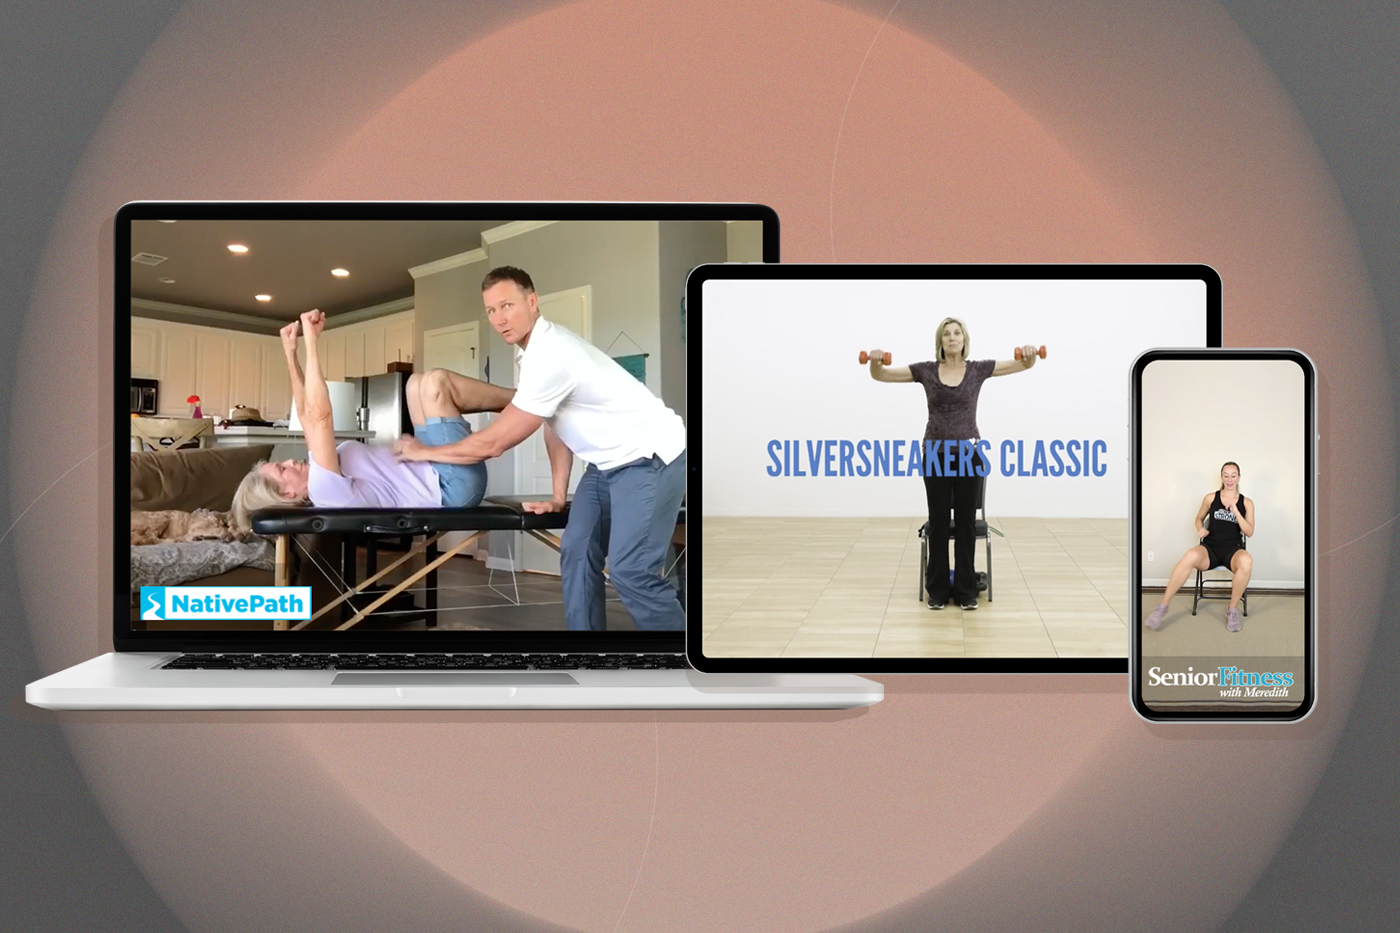 Chair Aerobics 3 Video Package on DVD – Stronger Seniors Chair Exercise  Programs